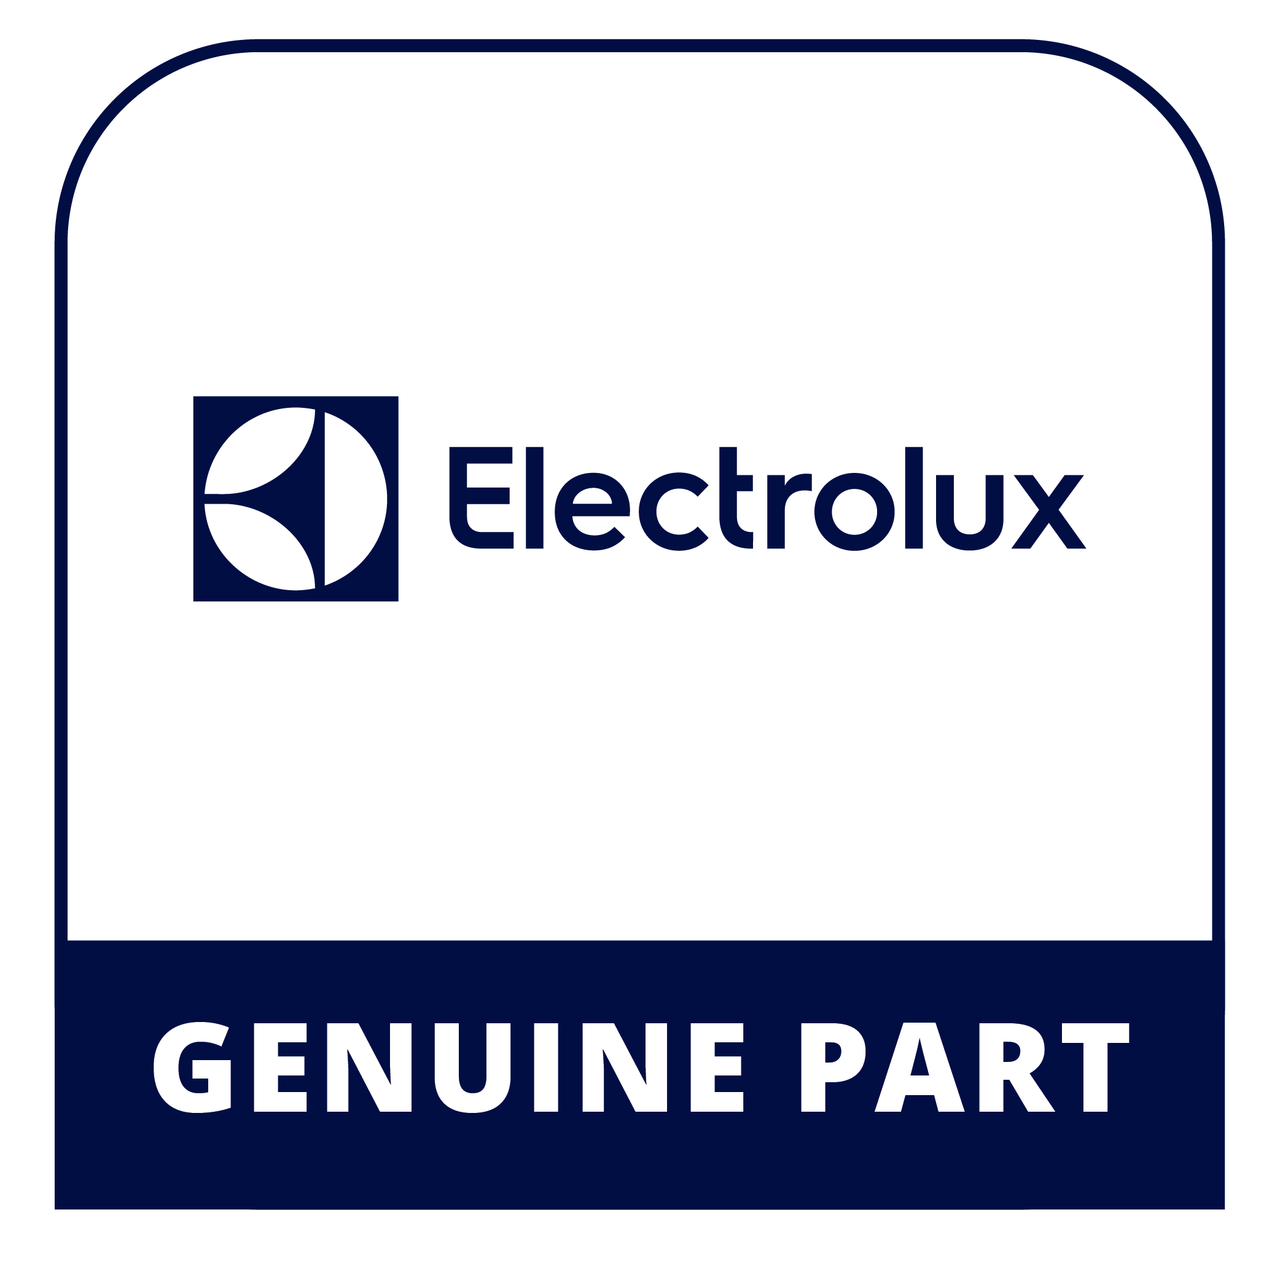 Frigidaire - Electrolux 5304499695 Shield - Genuine Electrolux Part